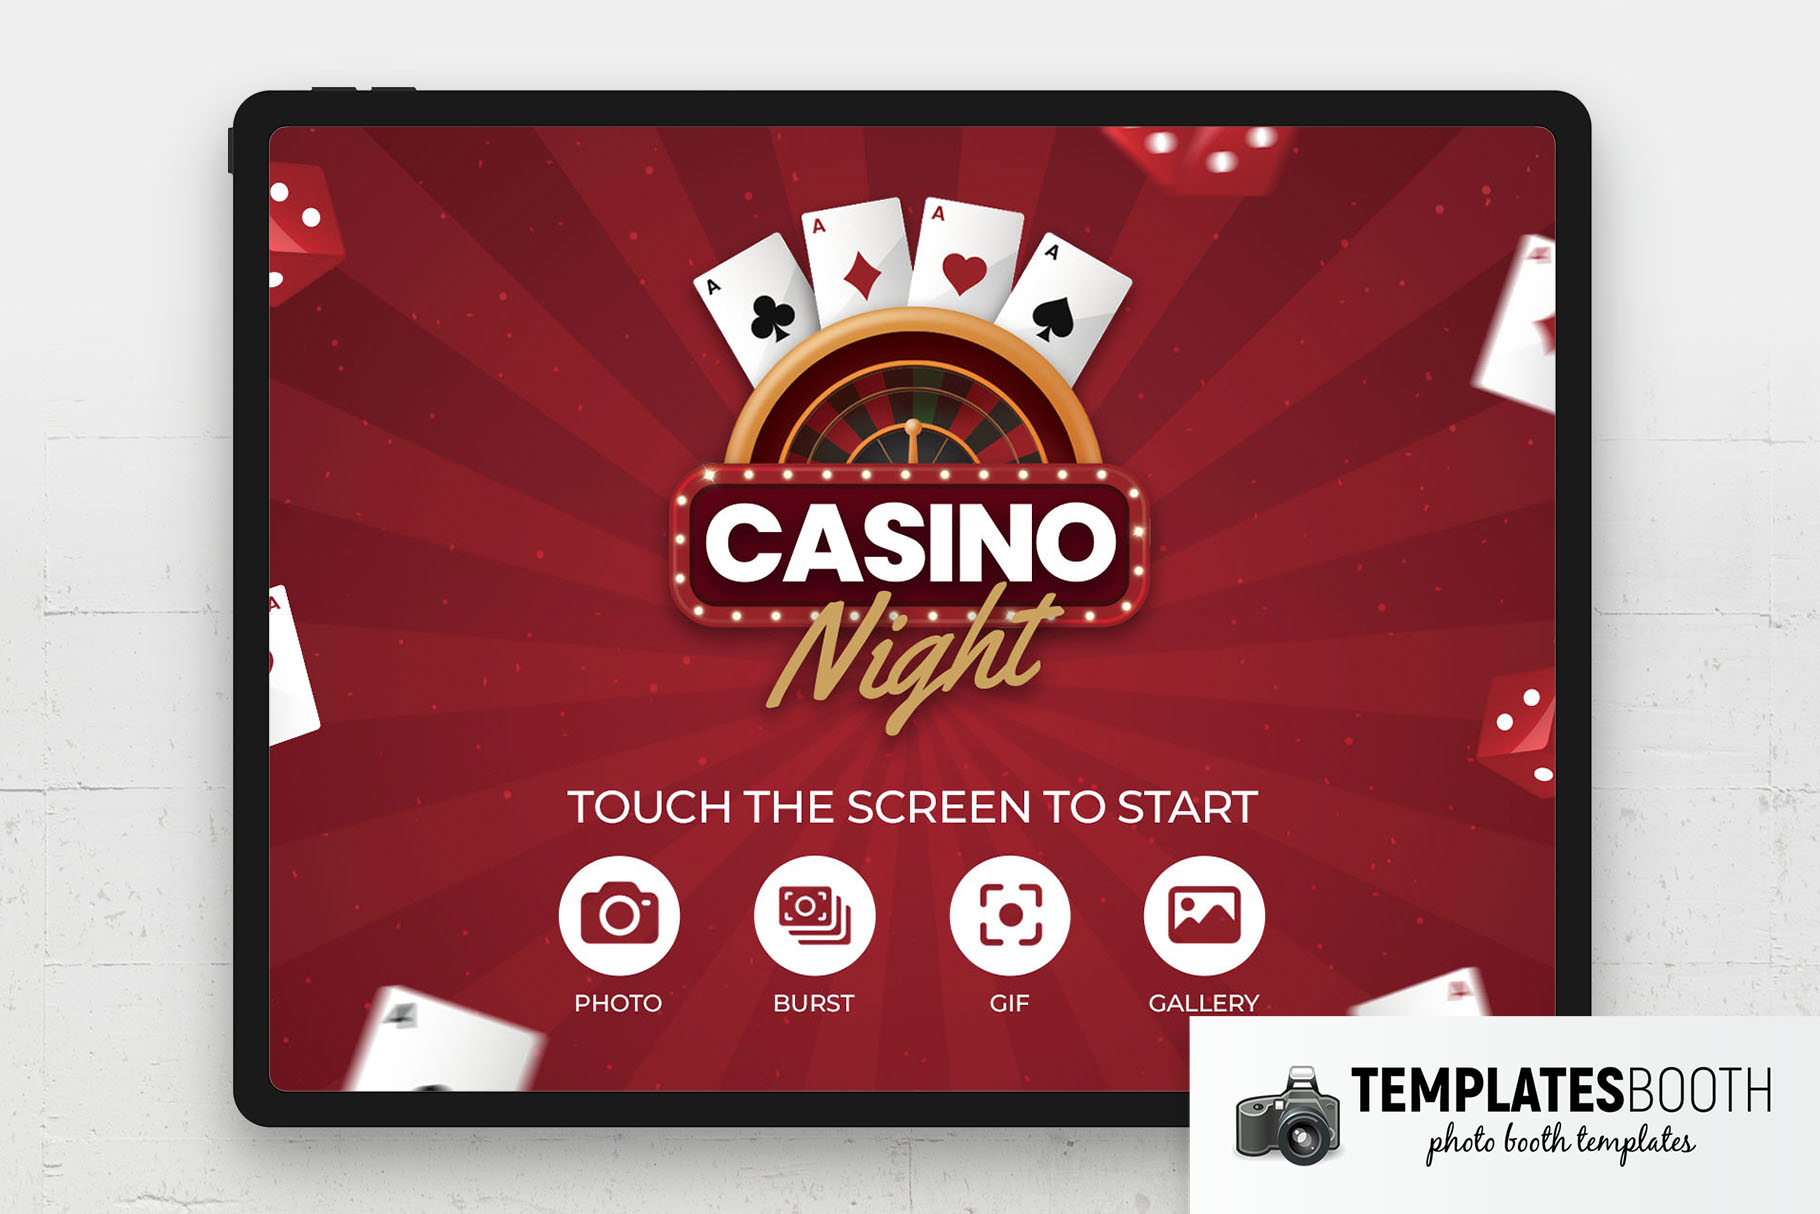 Casino Night Photo Booth Welcome Screen